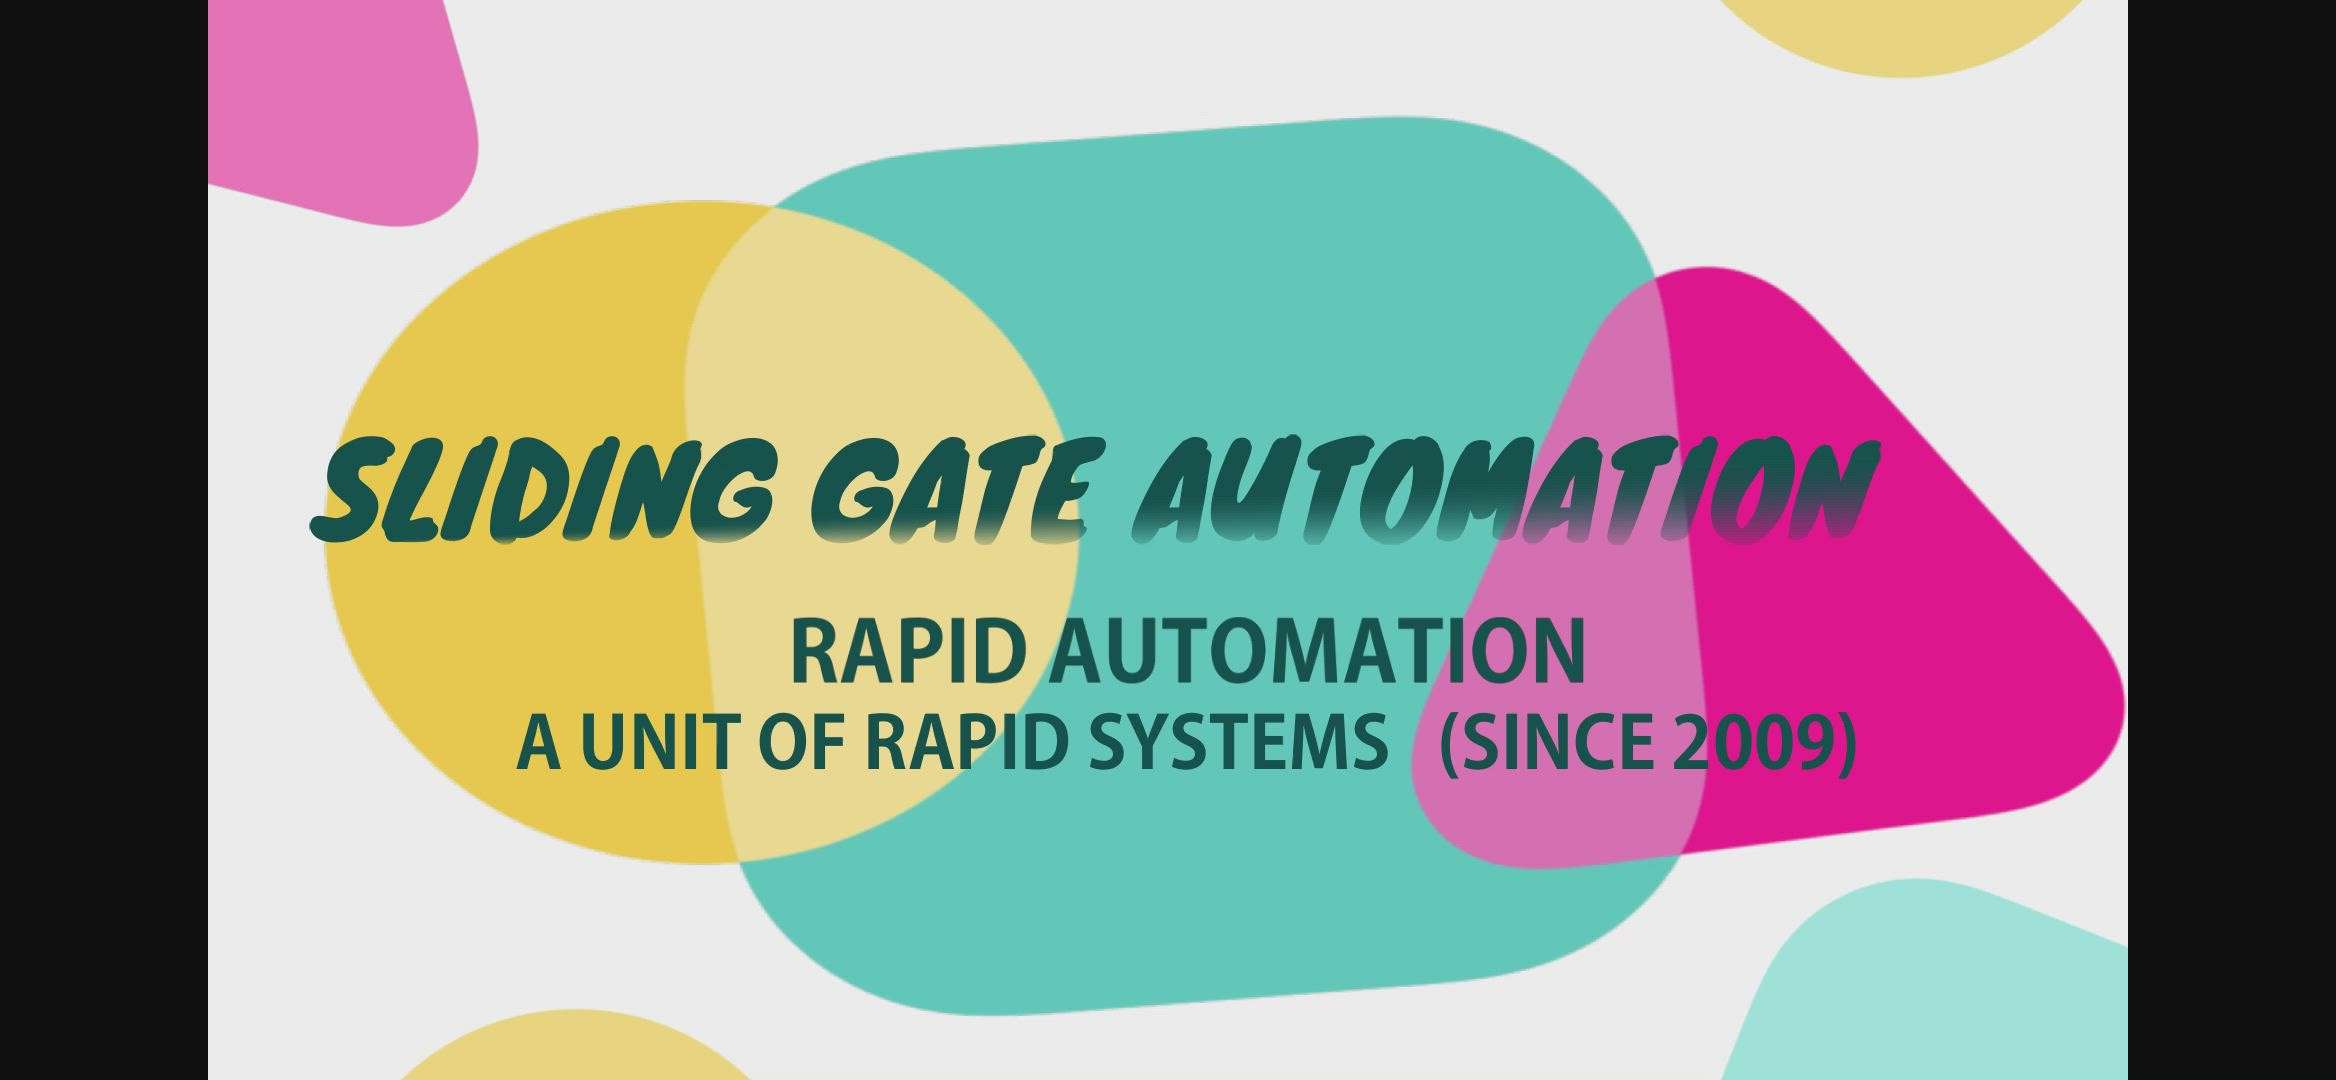 #AUTOMATIC SLIDING GATE  #HomeAutomation  #automaticgate  #automatic_gates  #gate